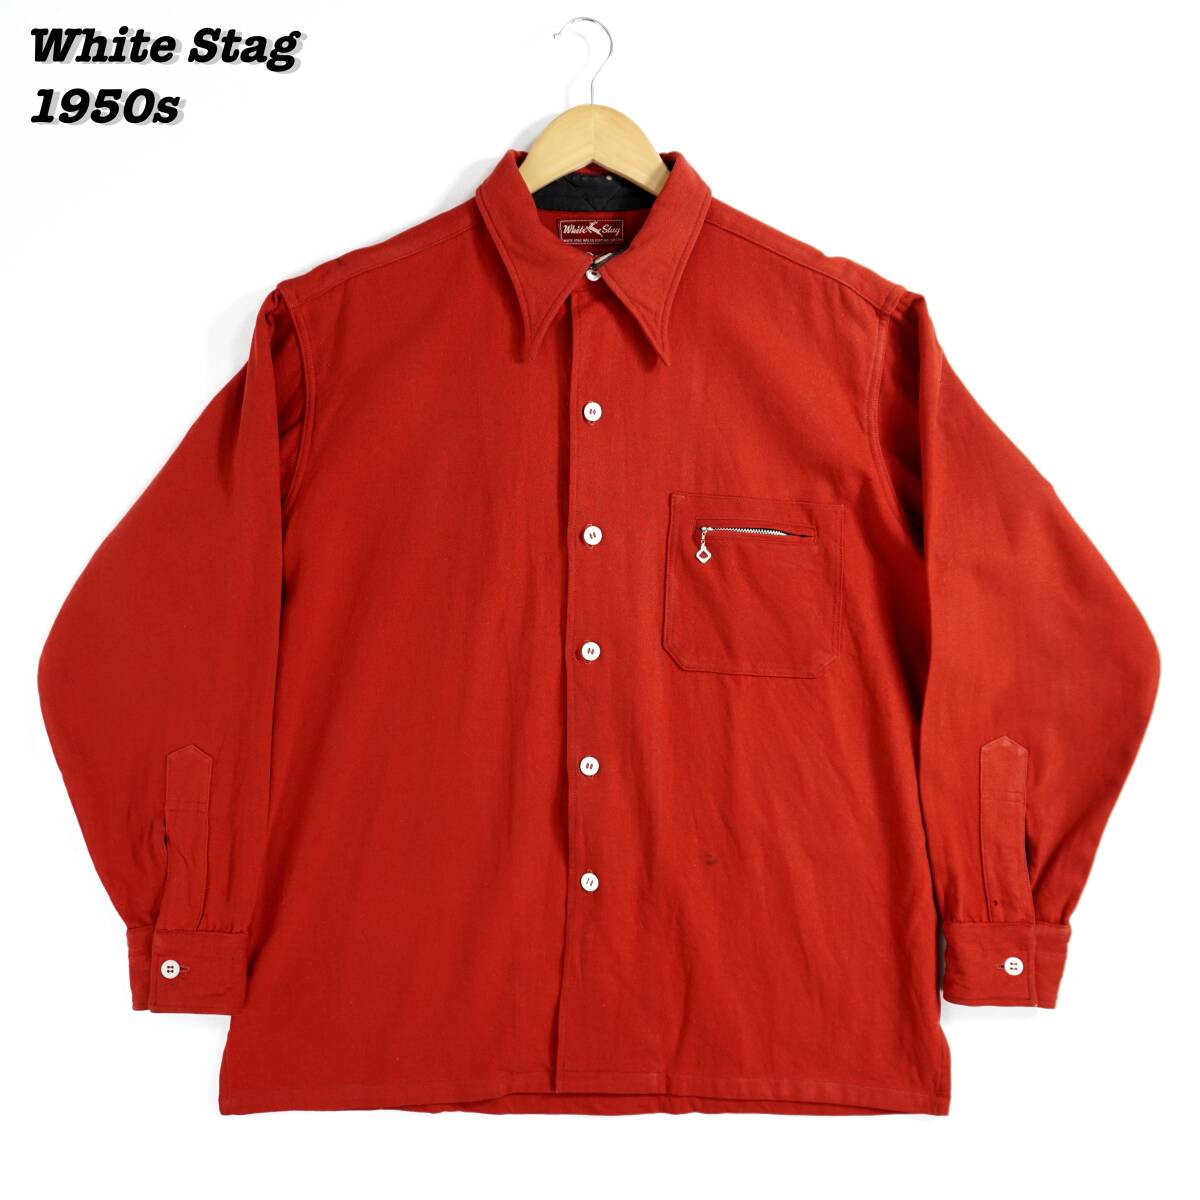 White Stag Wool Shirts 1950s SH24001 Vintage ホワイトスタッグ ウールシャツ シャツ 1950年代 ヴィンテージ